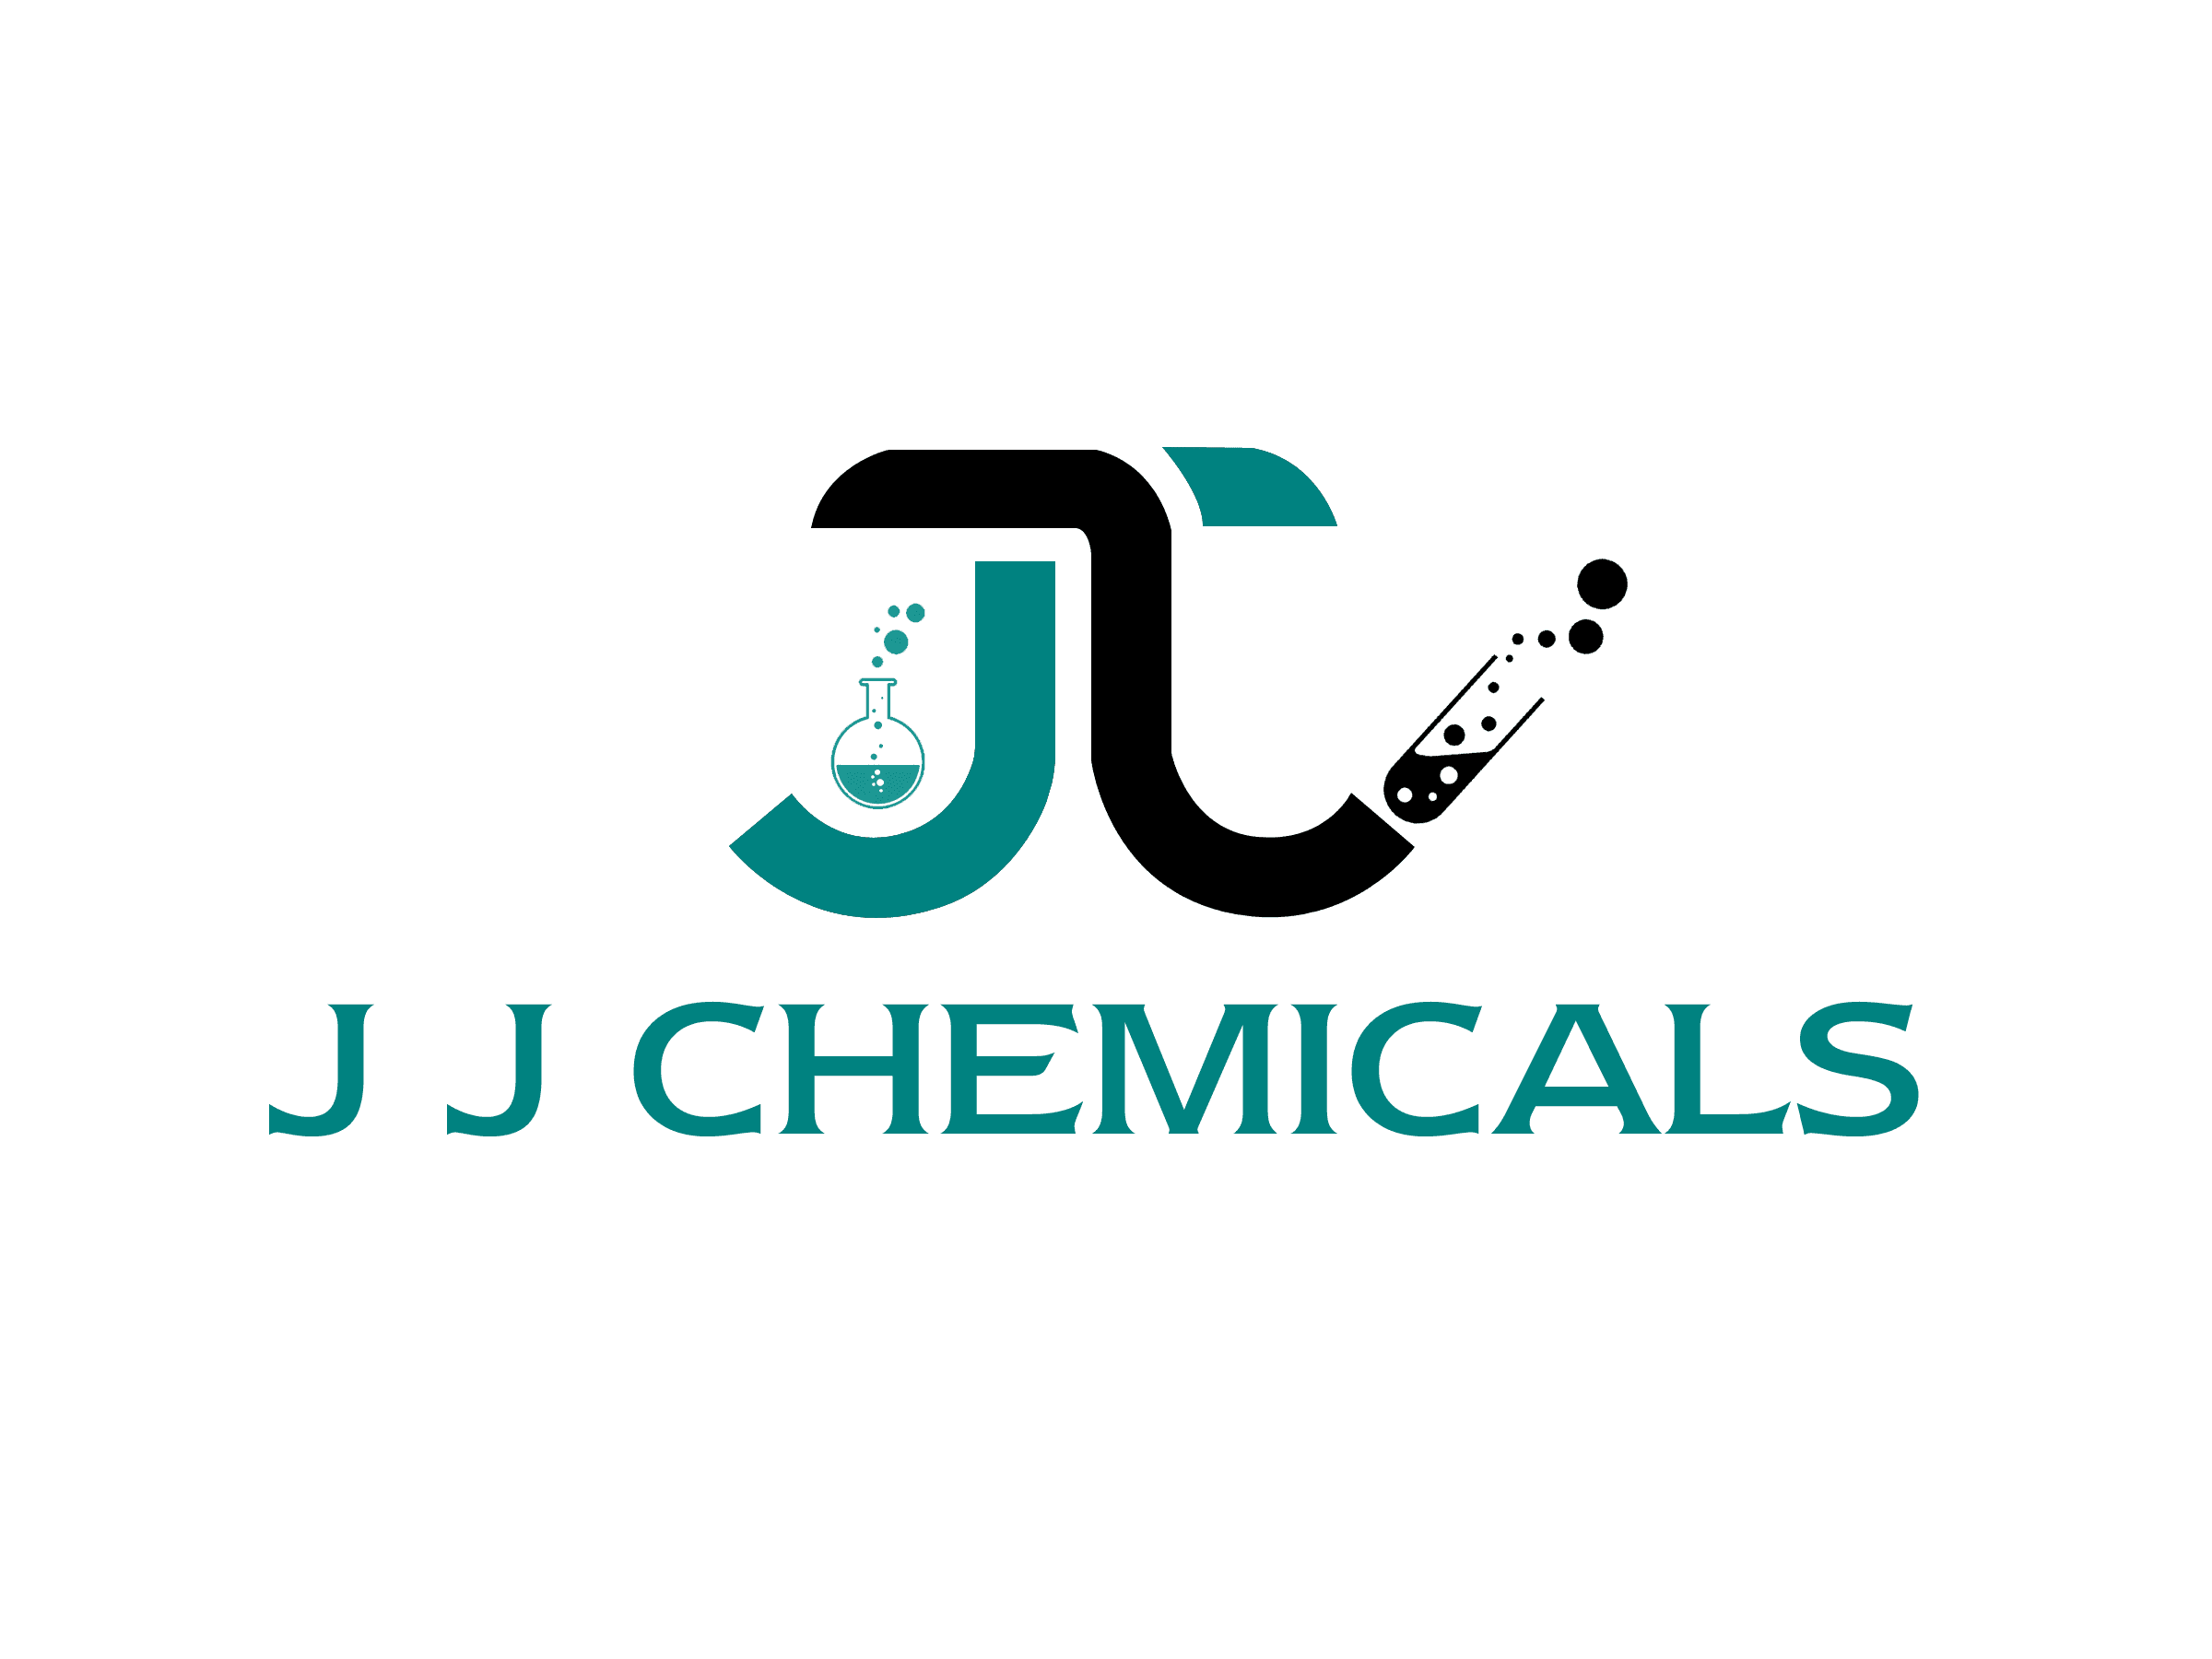 J J CHEMICALS